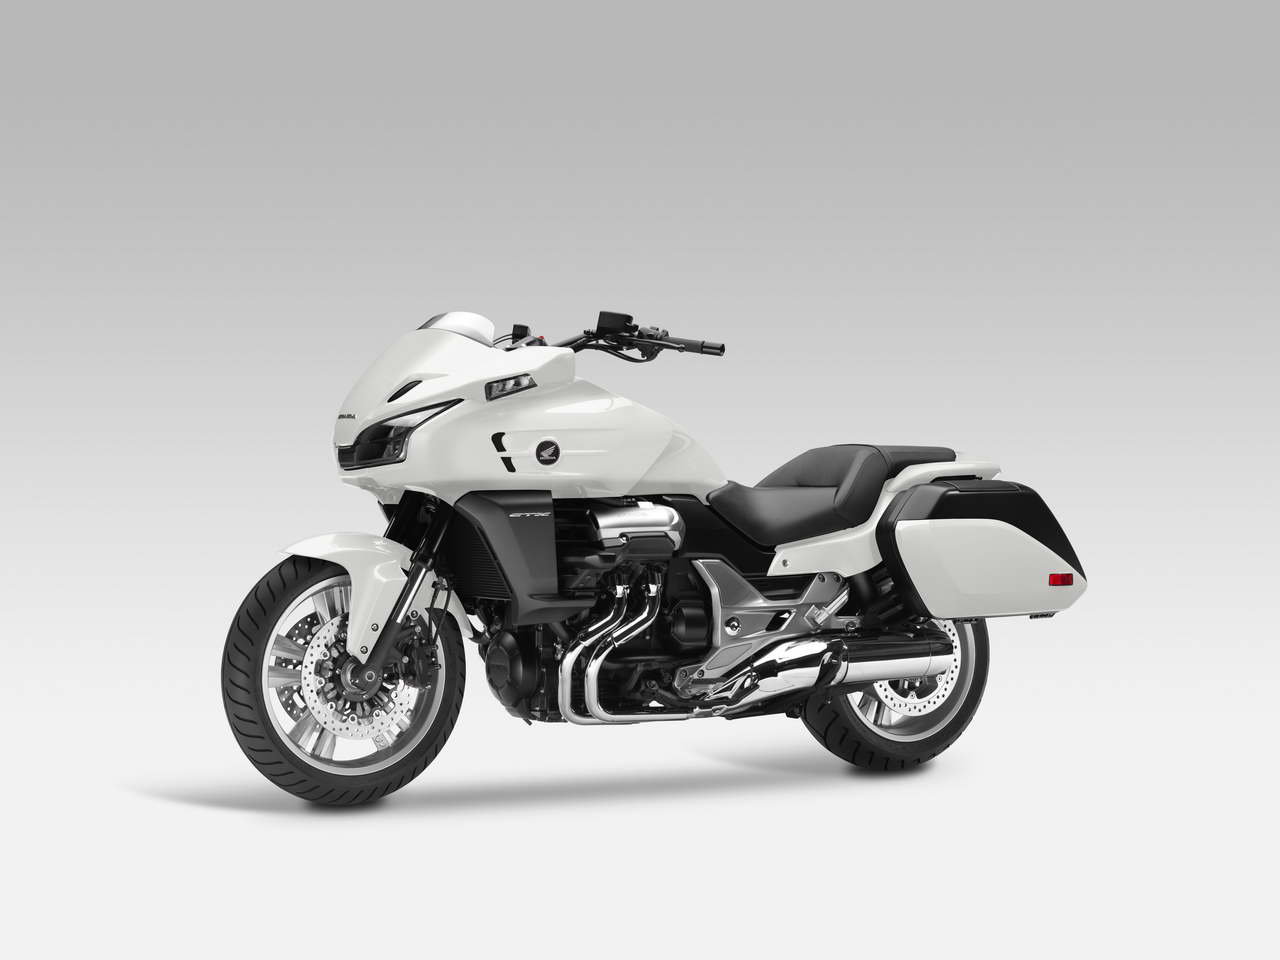 Listino Honda CB 500F Naked Media - image 14679_honda-ctx1300 on https://moto.motori.net